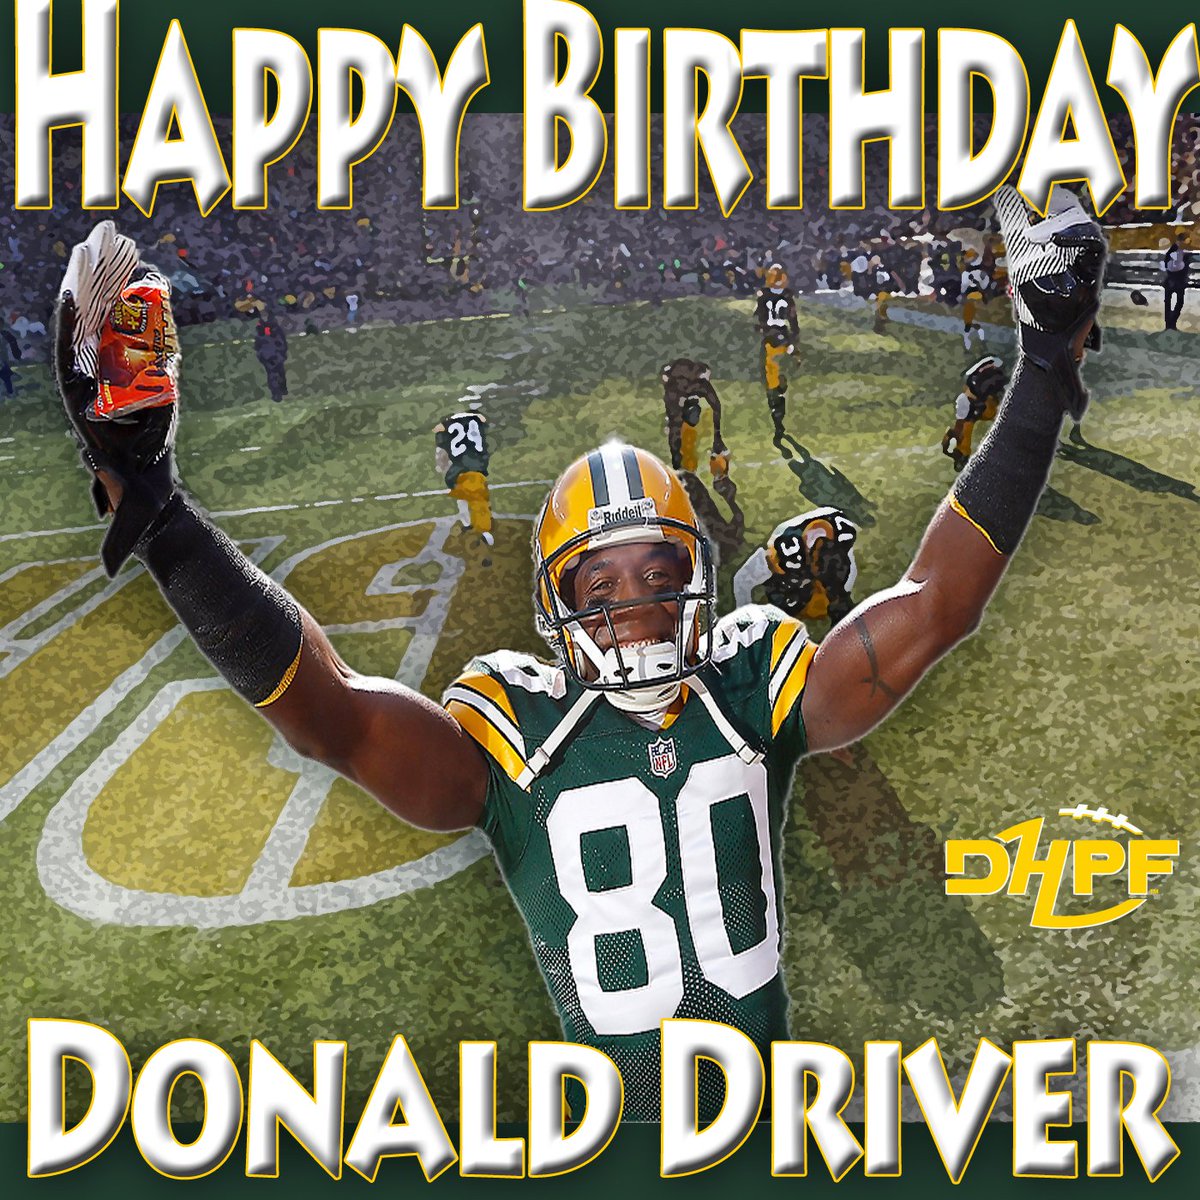 Happy Birthday @Donald_Driver80 

#PackersFamily #GoPackGo #DonaldDriver #DHPF